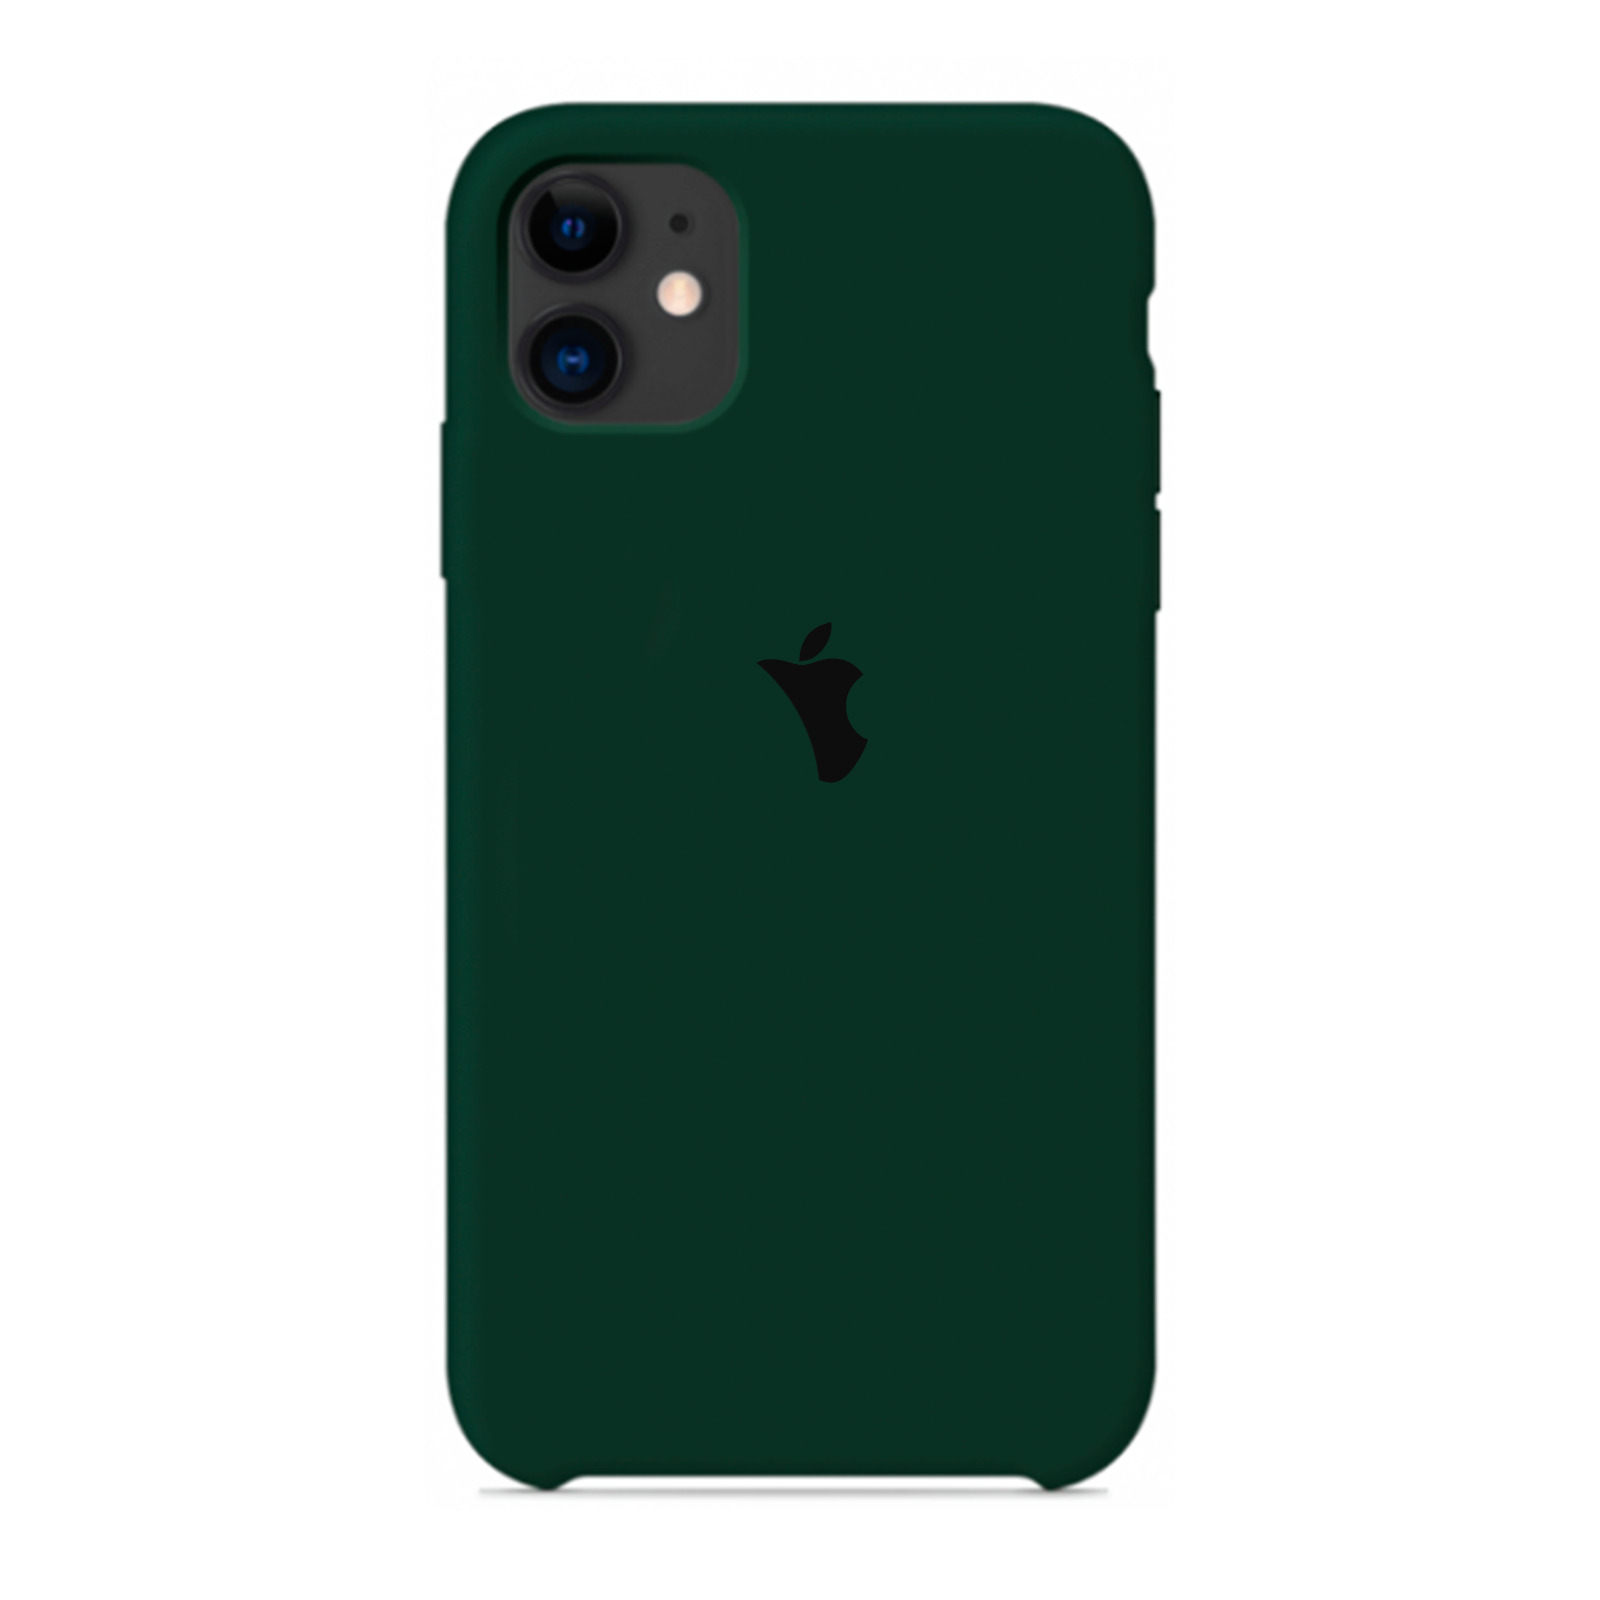 Iphone 11 Green